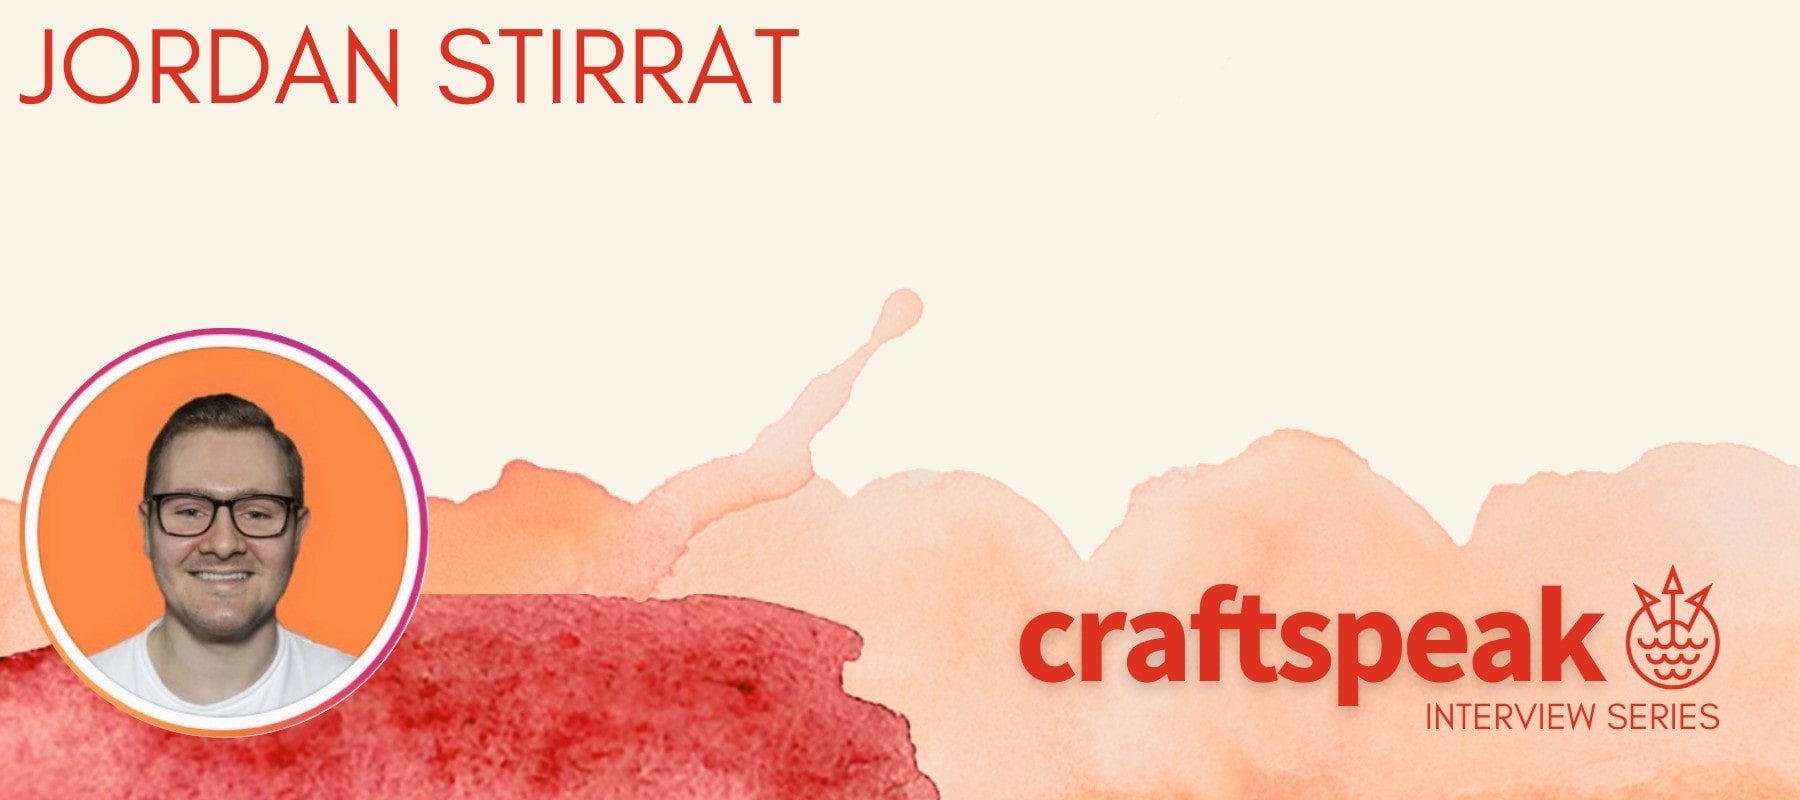 Craftspeak: Jordan Stirrat